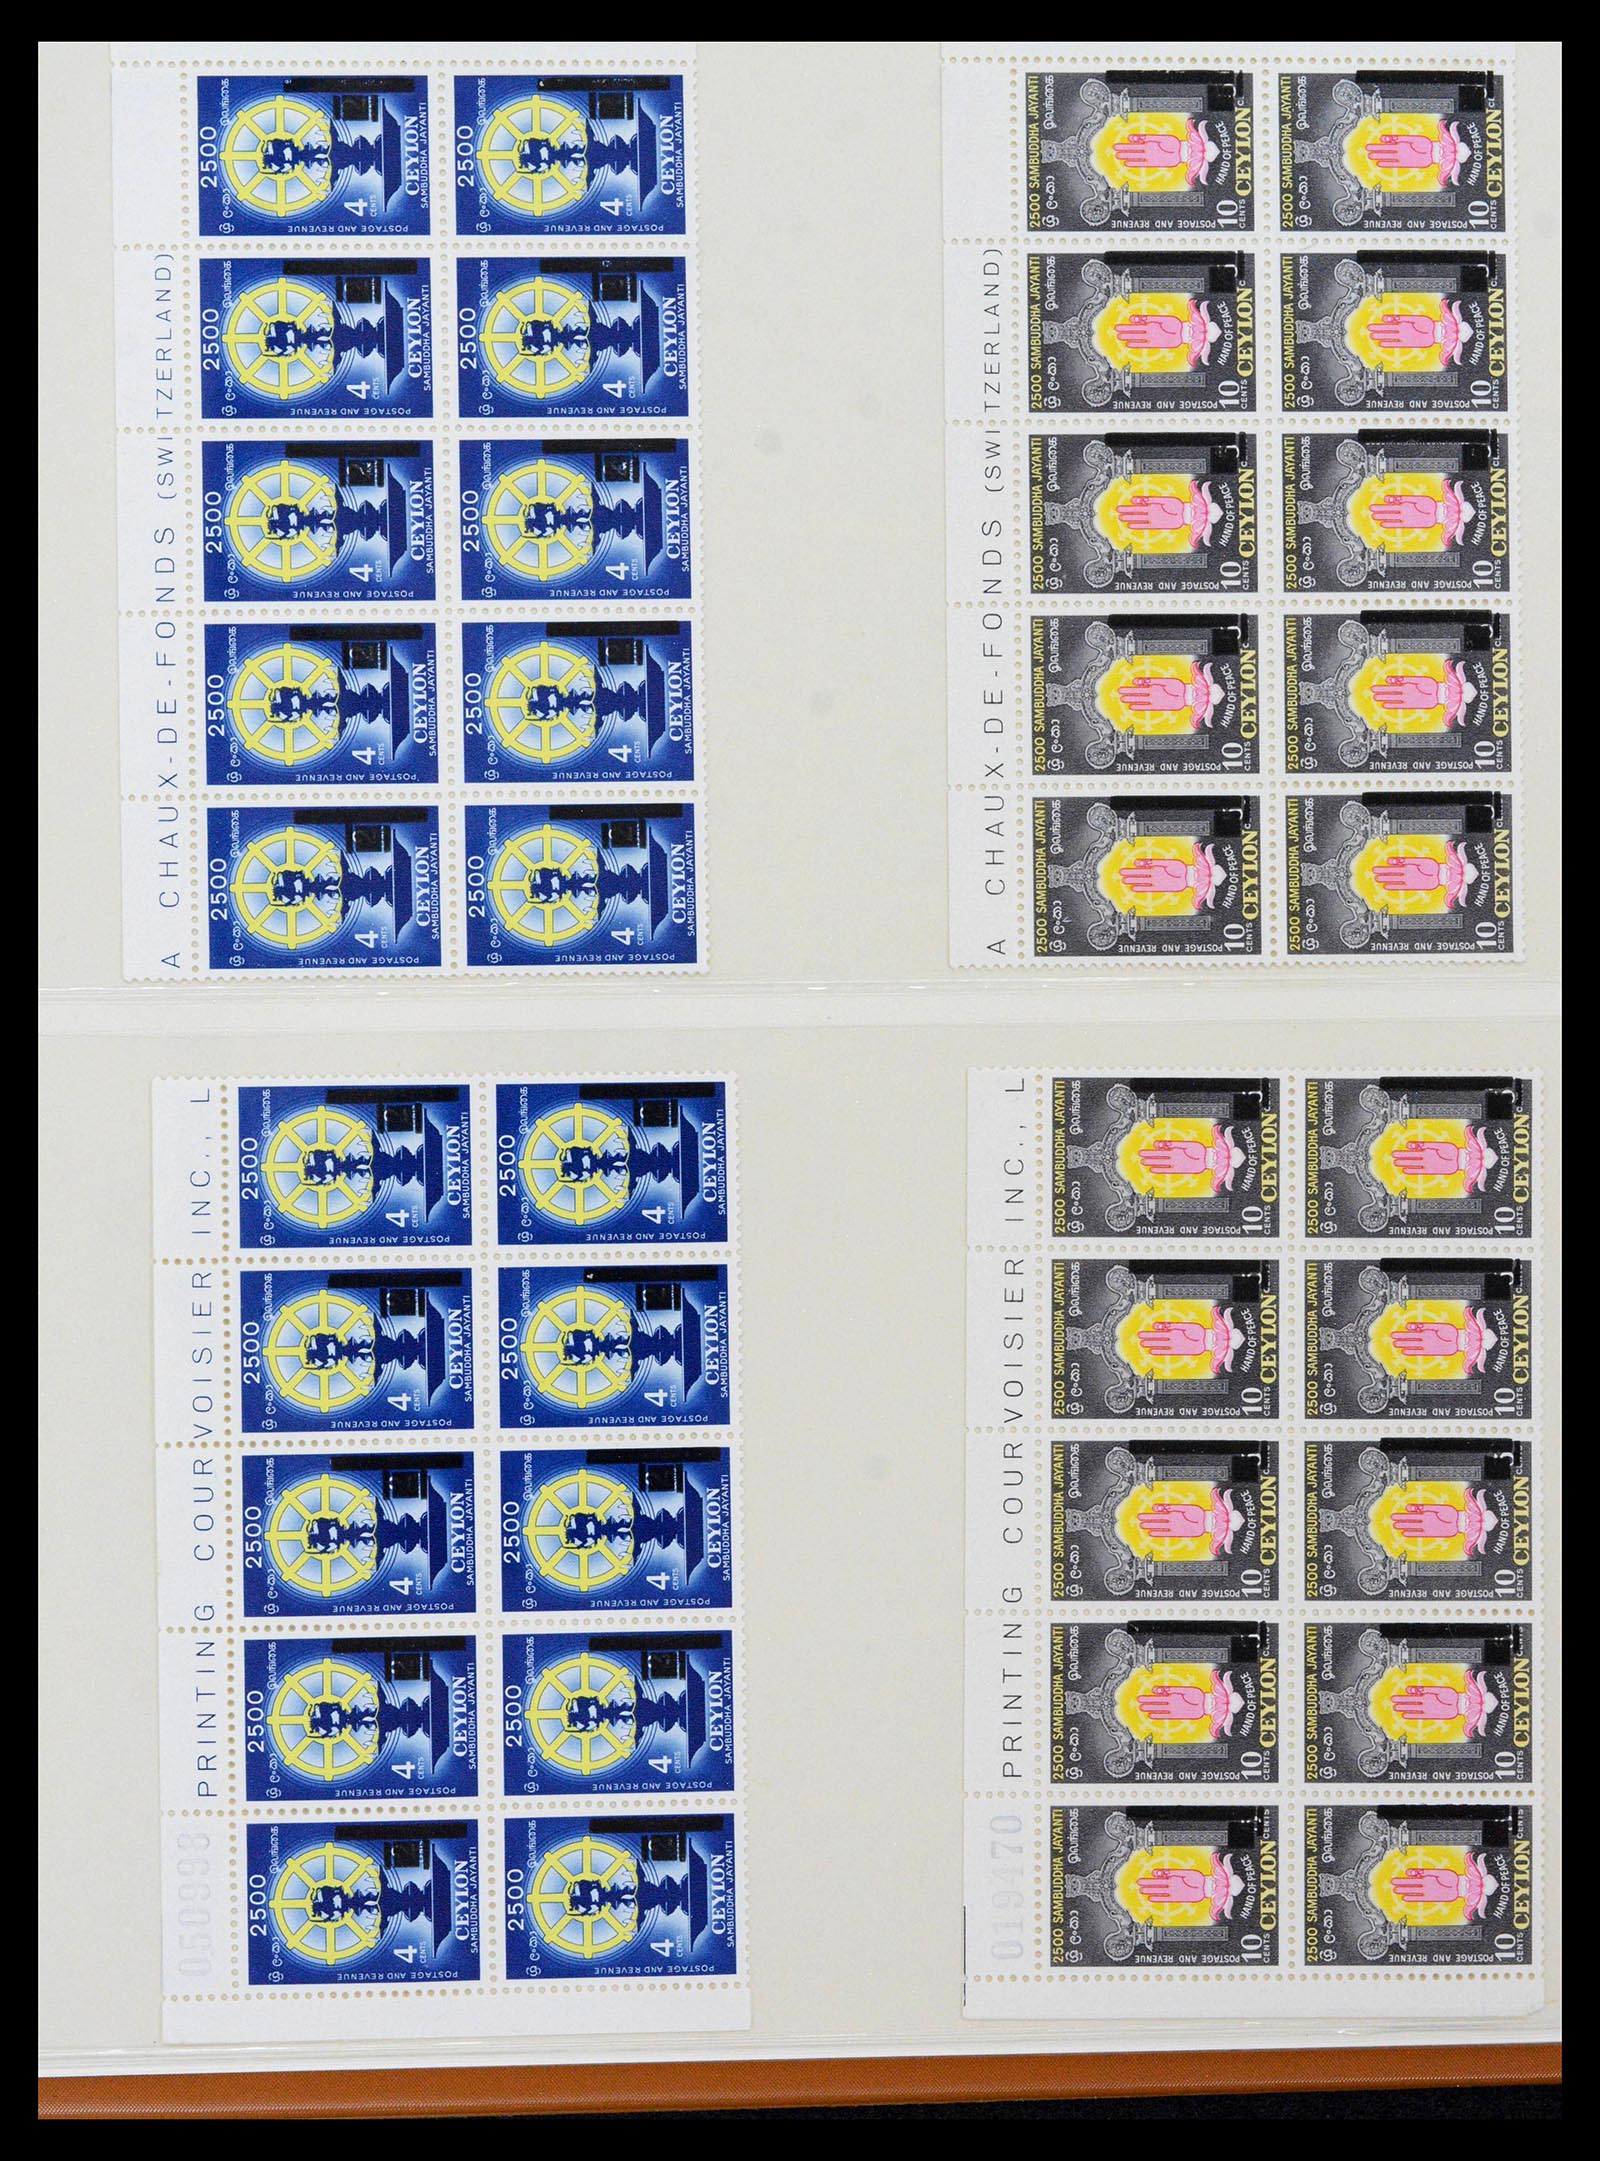 39003 0025 - Stamp collection 39003 Ceylon/Sri Lanka 1857-2003.